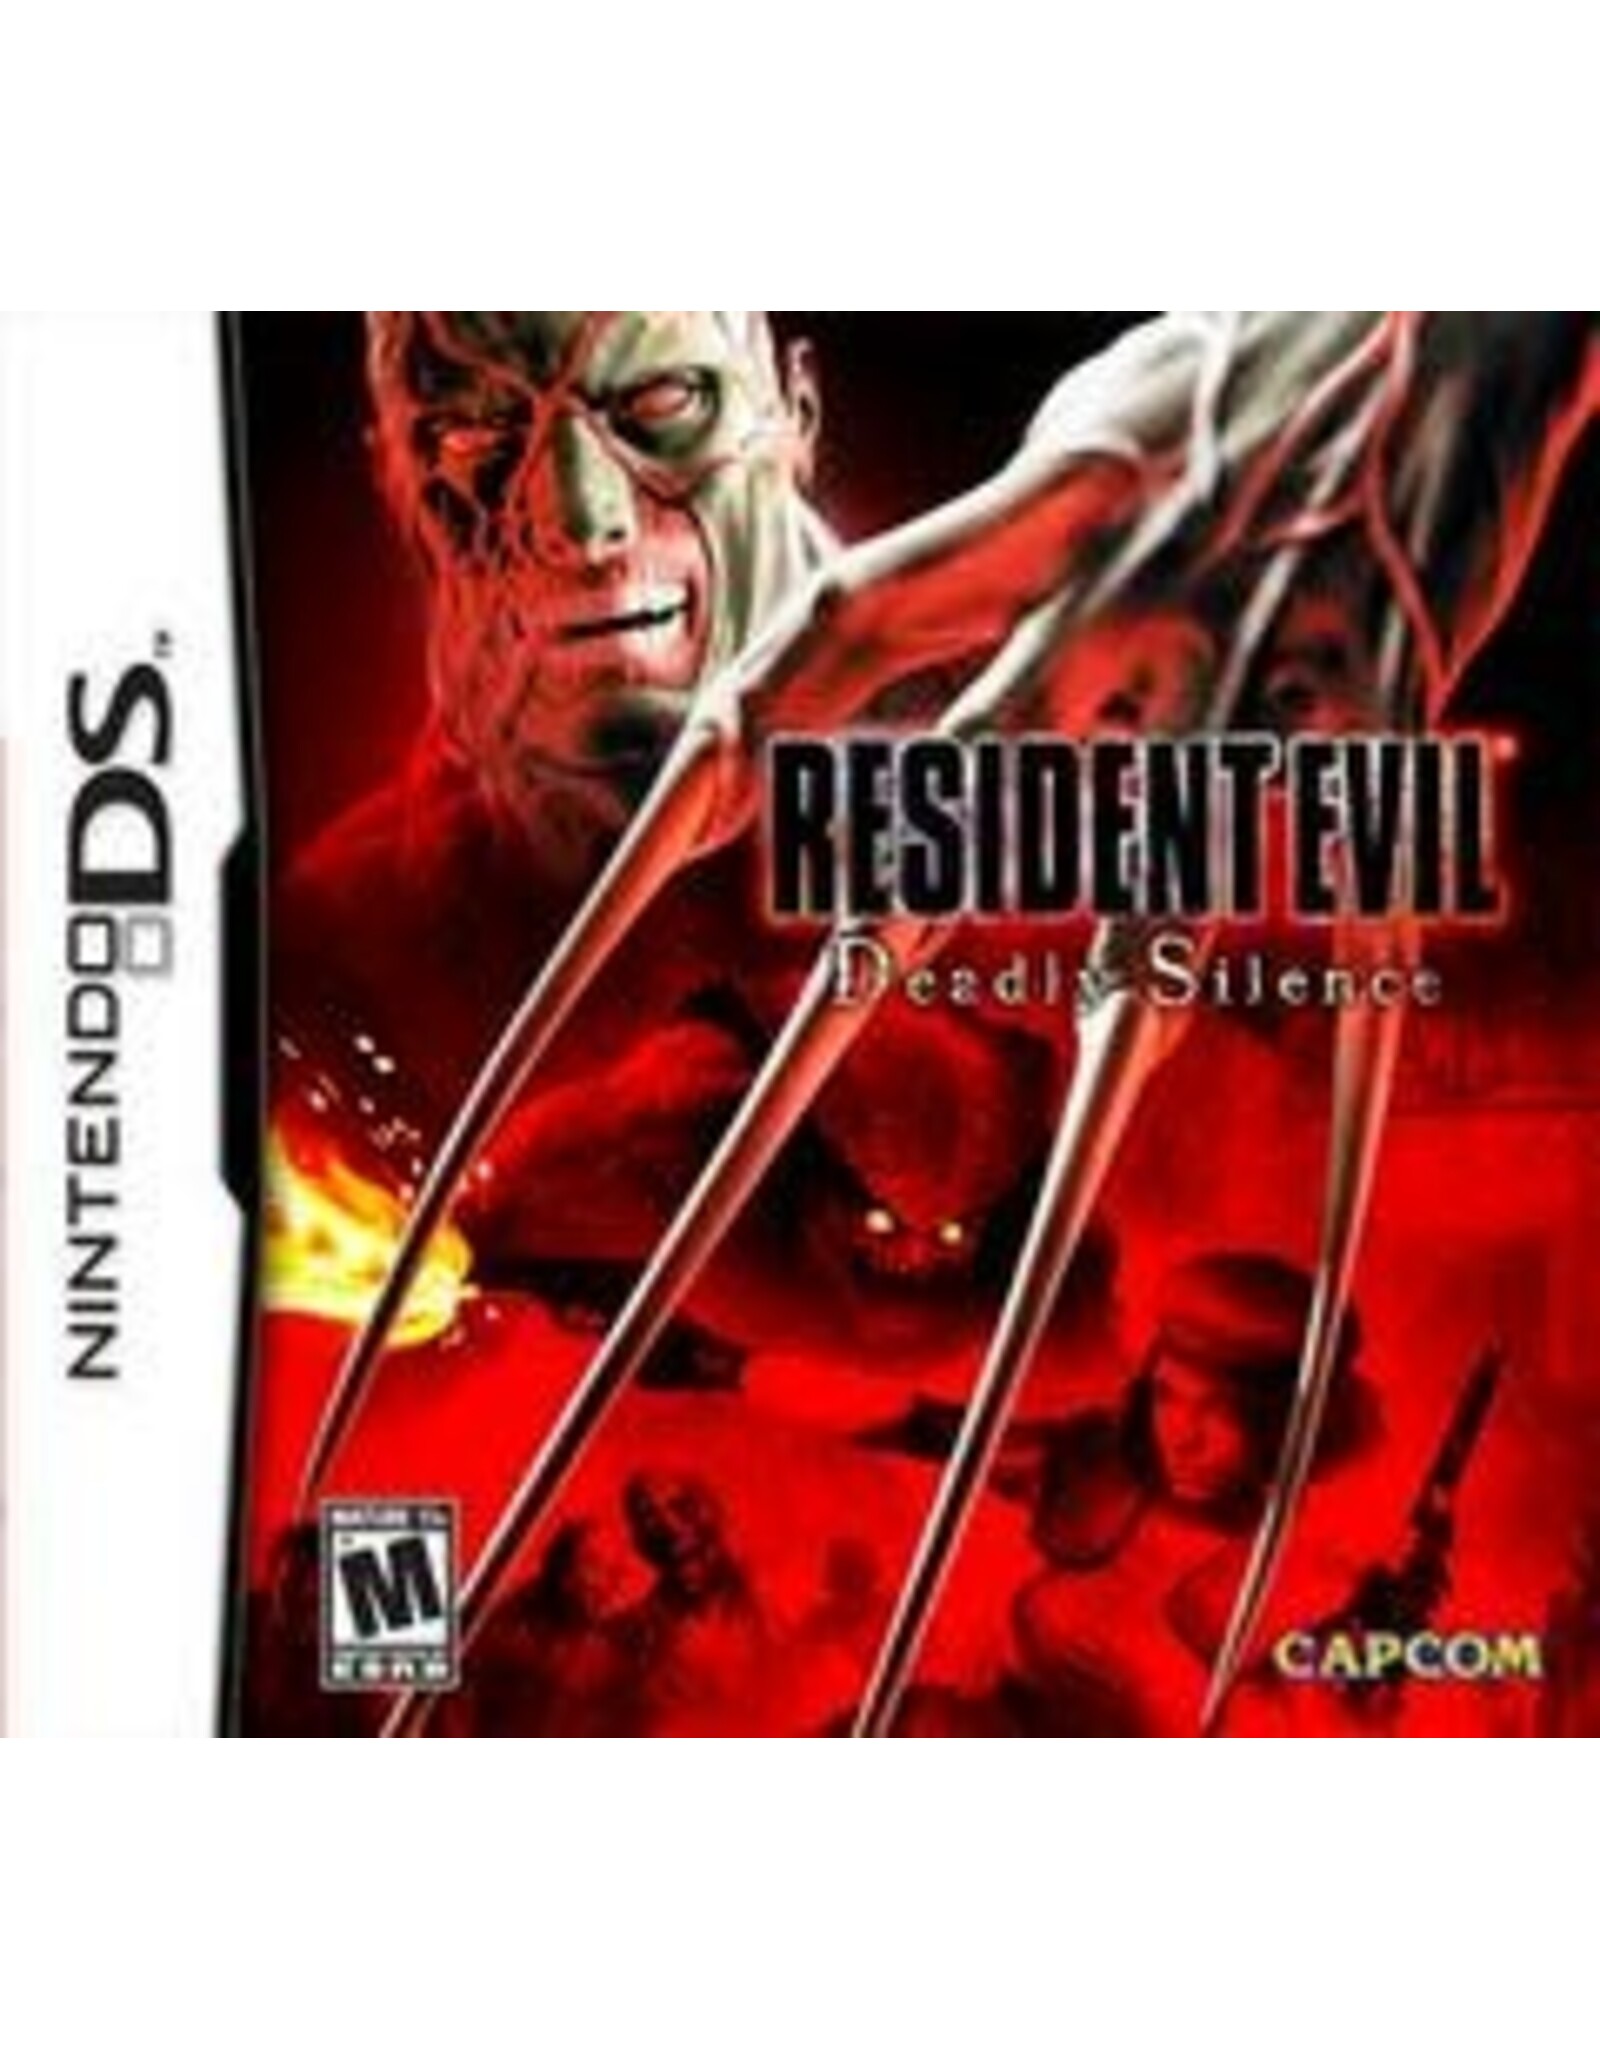 Nintendo DS Resident Evil Deadly Silence (CiB, Damaged Manual)